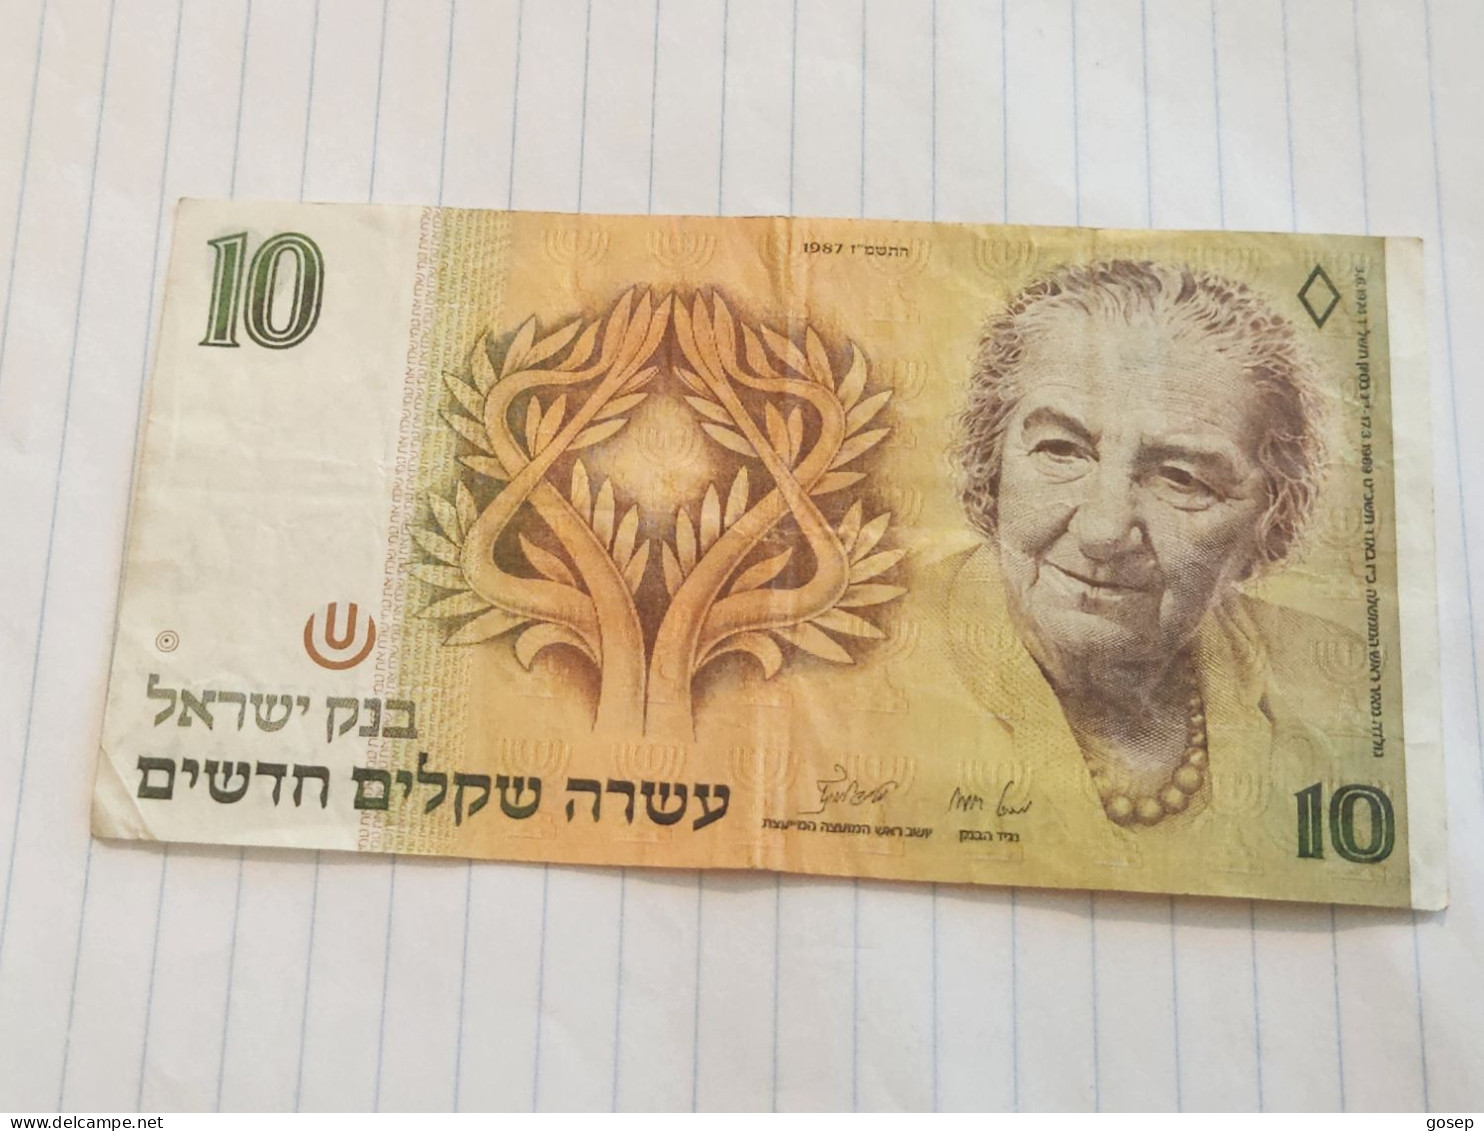 Israel-10 NEW SHEQELIM-GOLDA MEIR-(1987)(528)(LORINCZ/BRUNO)-(0424137888)-USED-bank Note - Israel